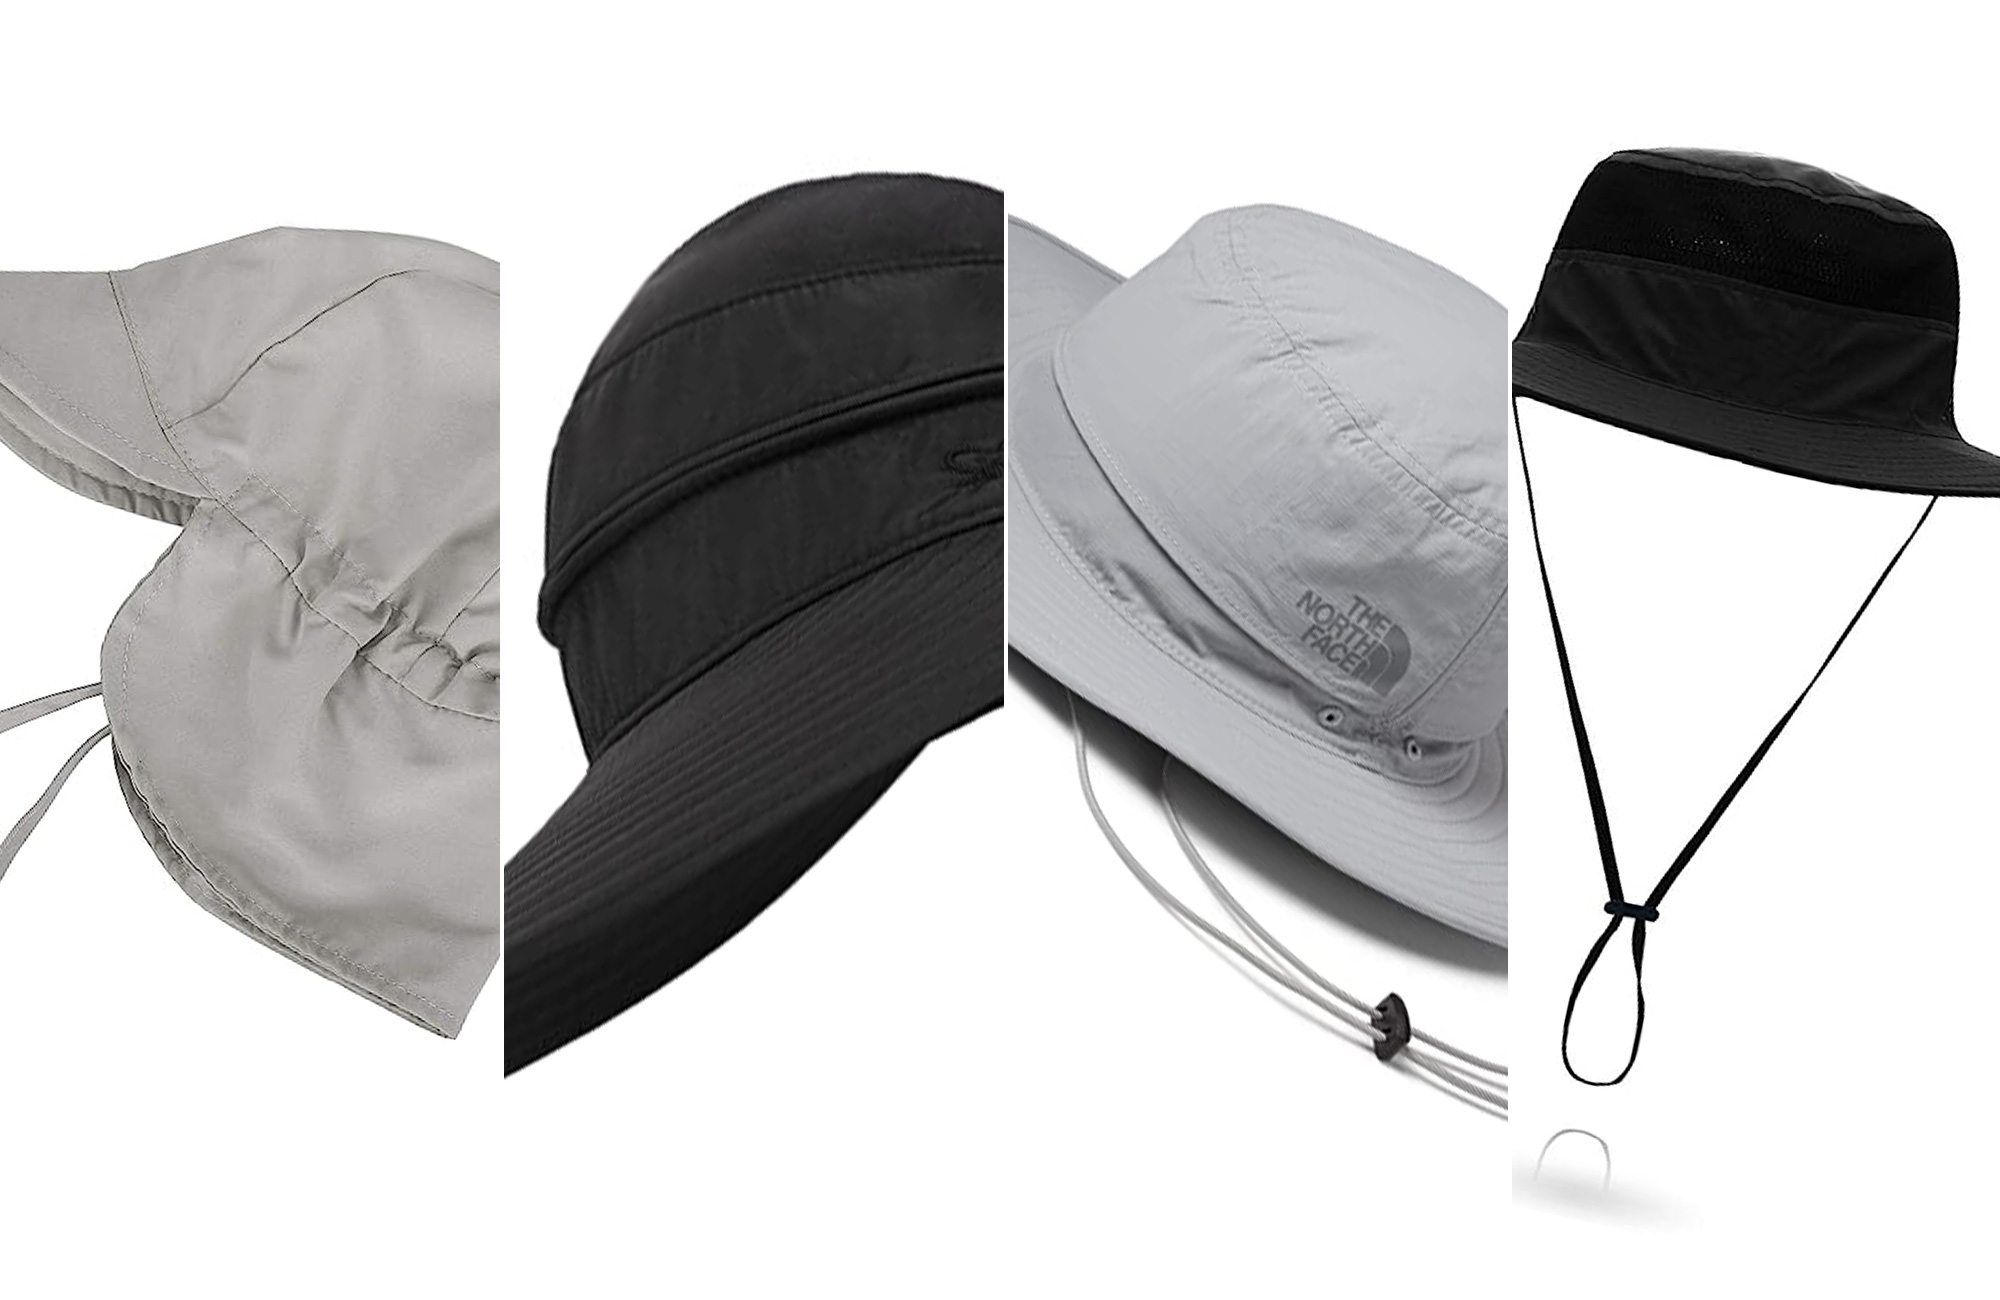 Baby UPF 50+ Adjustable Drawstring Wide Brim Bucket Sun Hat – Simplicity